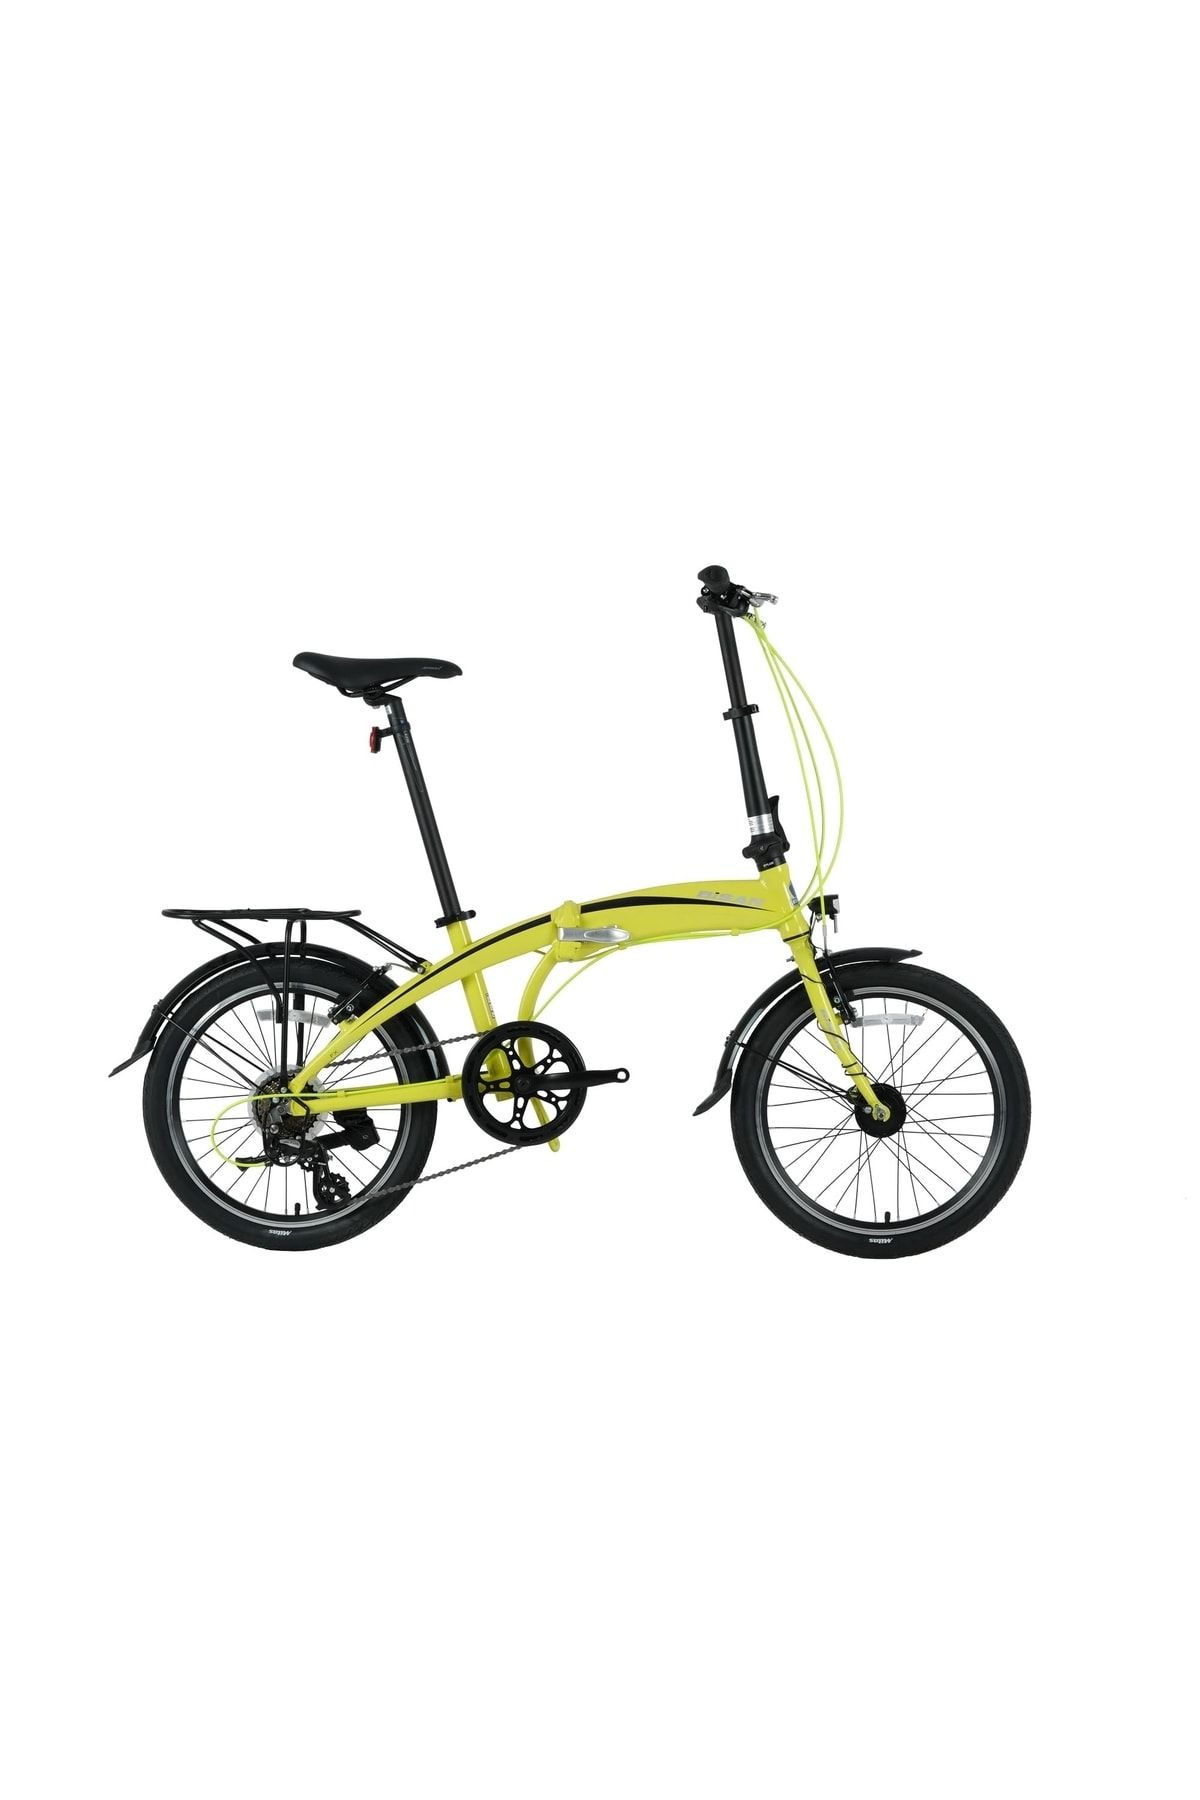 Bisan Fx 3500-altus 20 Jant 280h 8-vites Vb Katlanır Bisiklet Neon Sarı Siyah